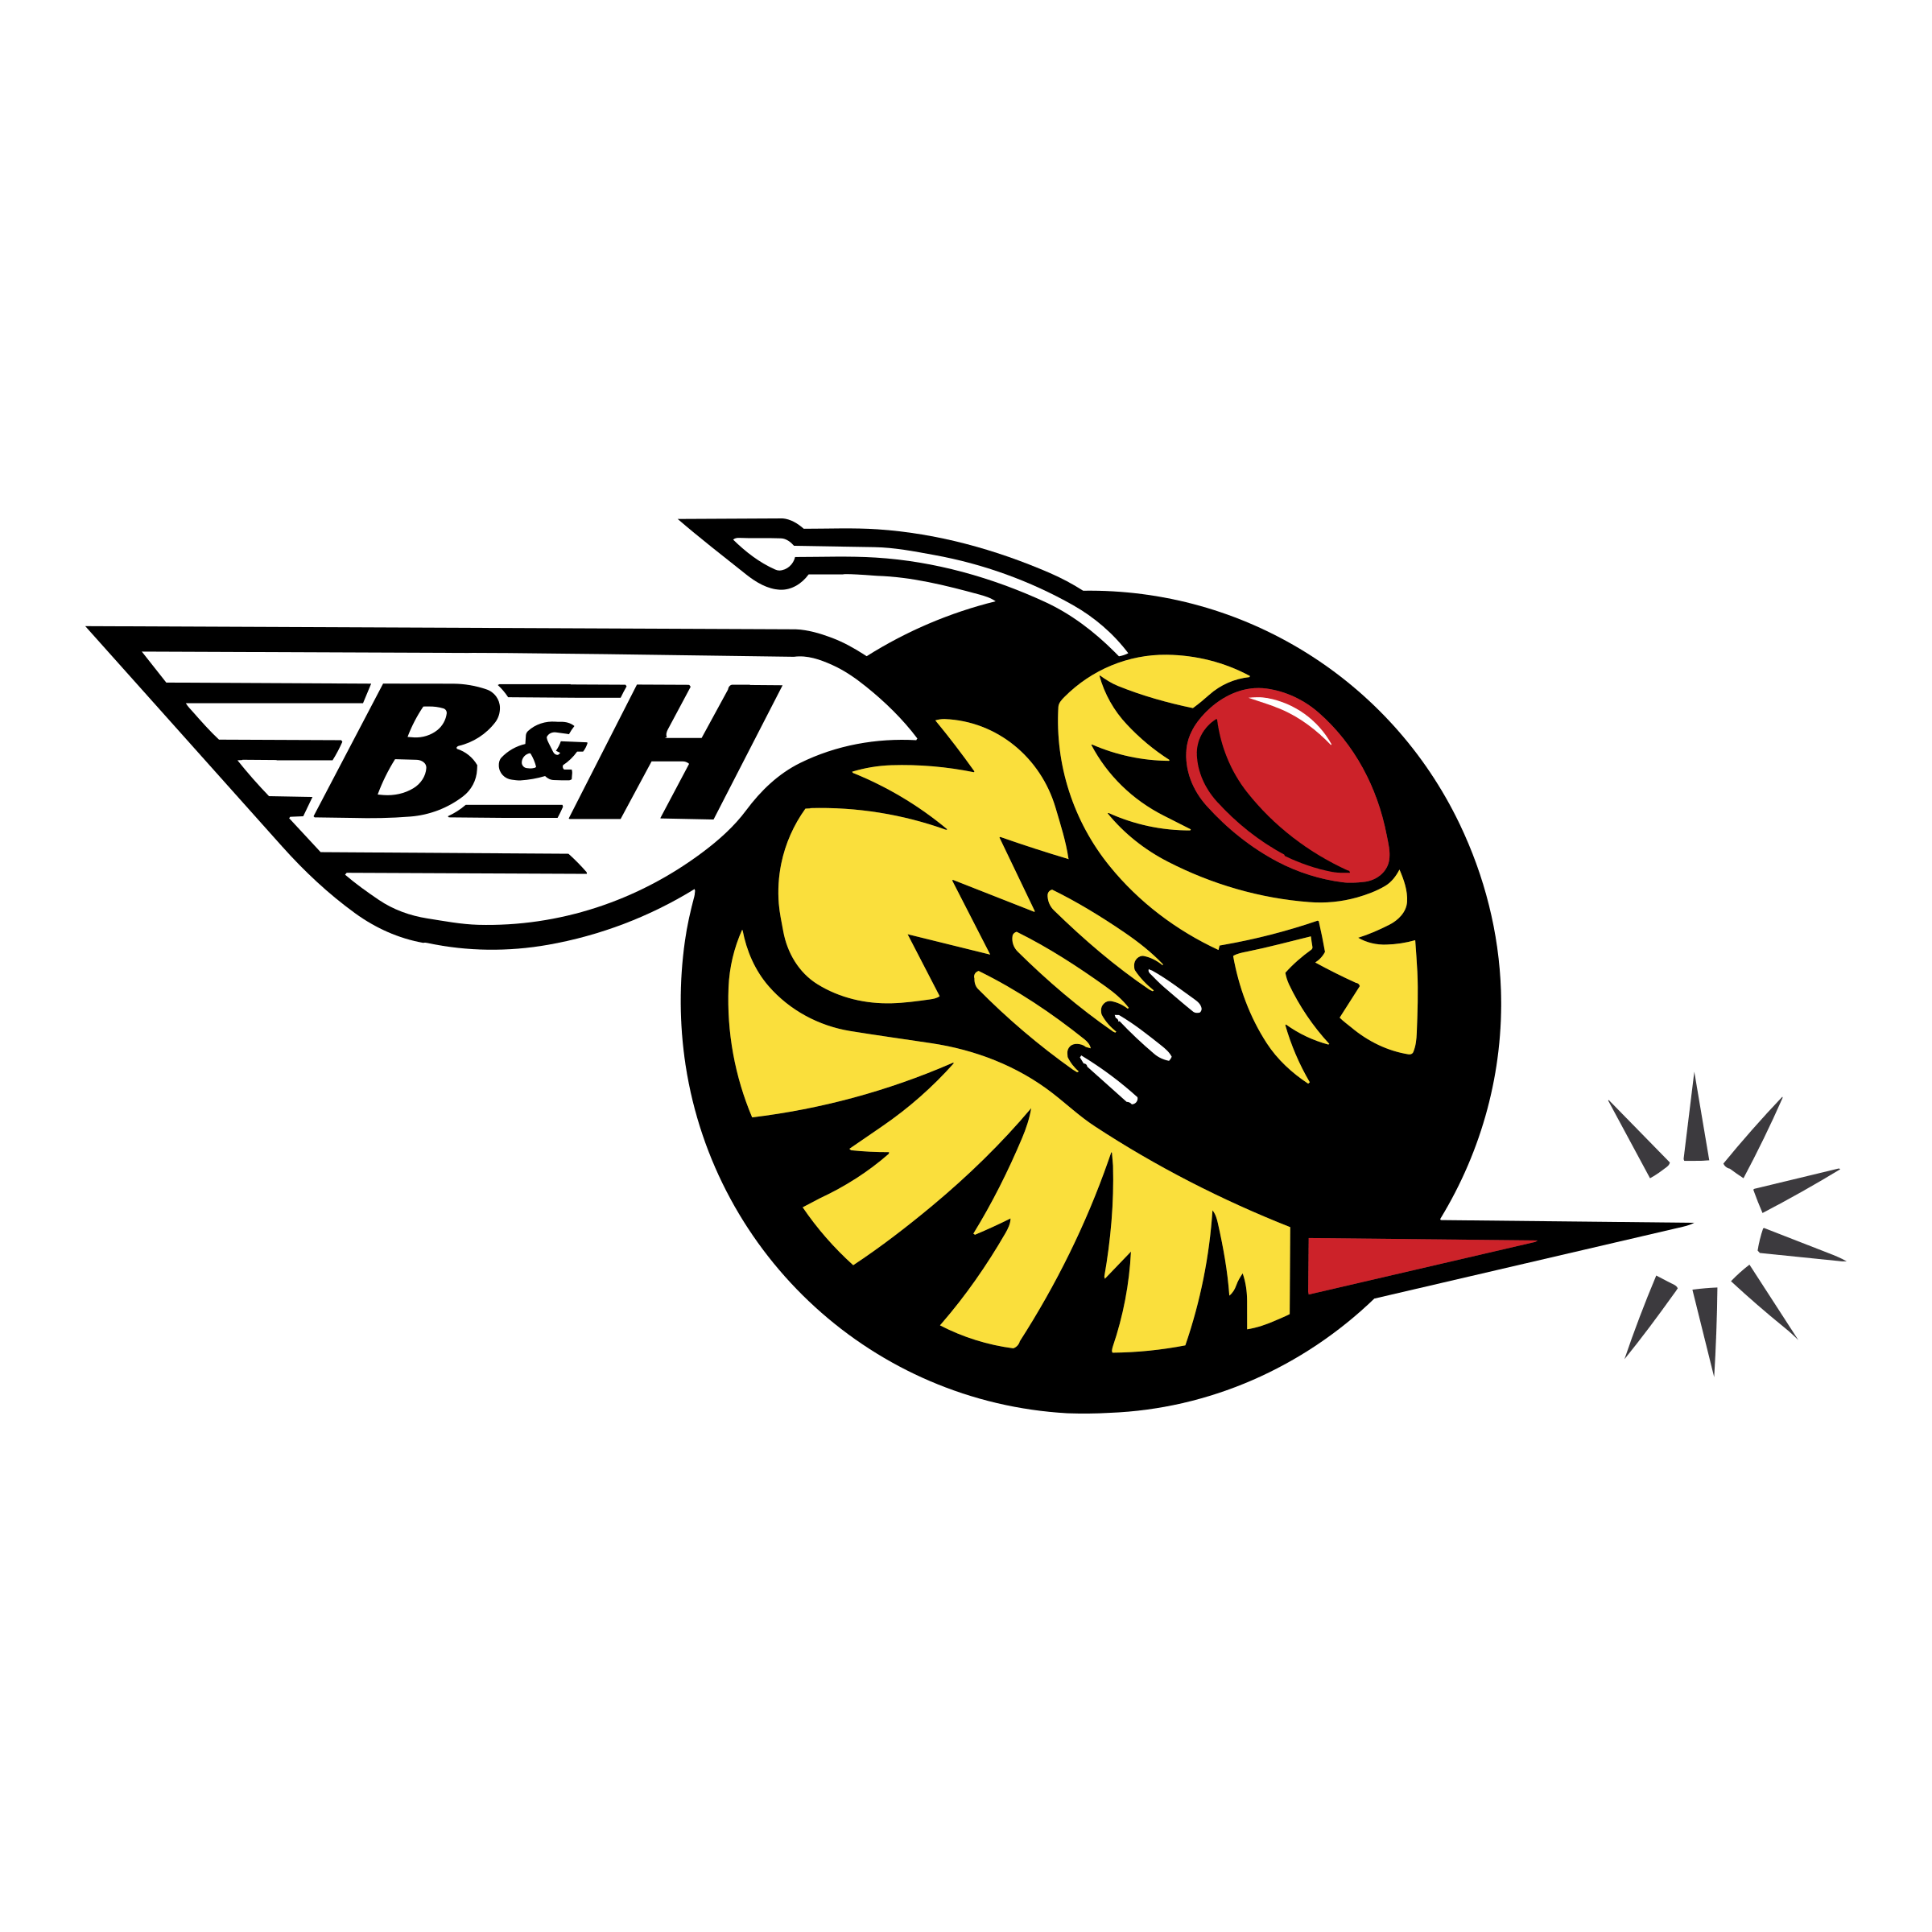 Large Jordan Logo - B&H Jordan Logo PNG Transparent & SVG Vector